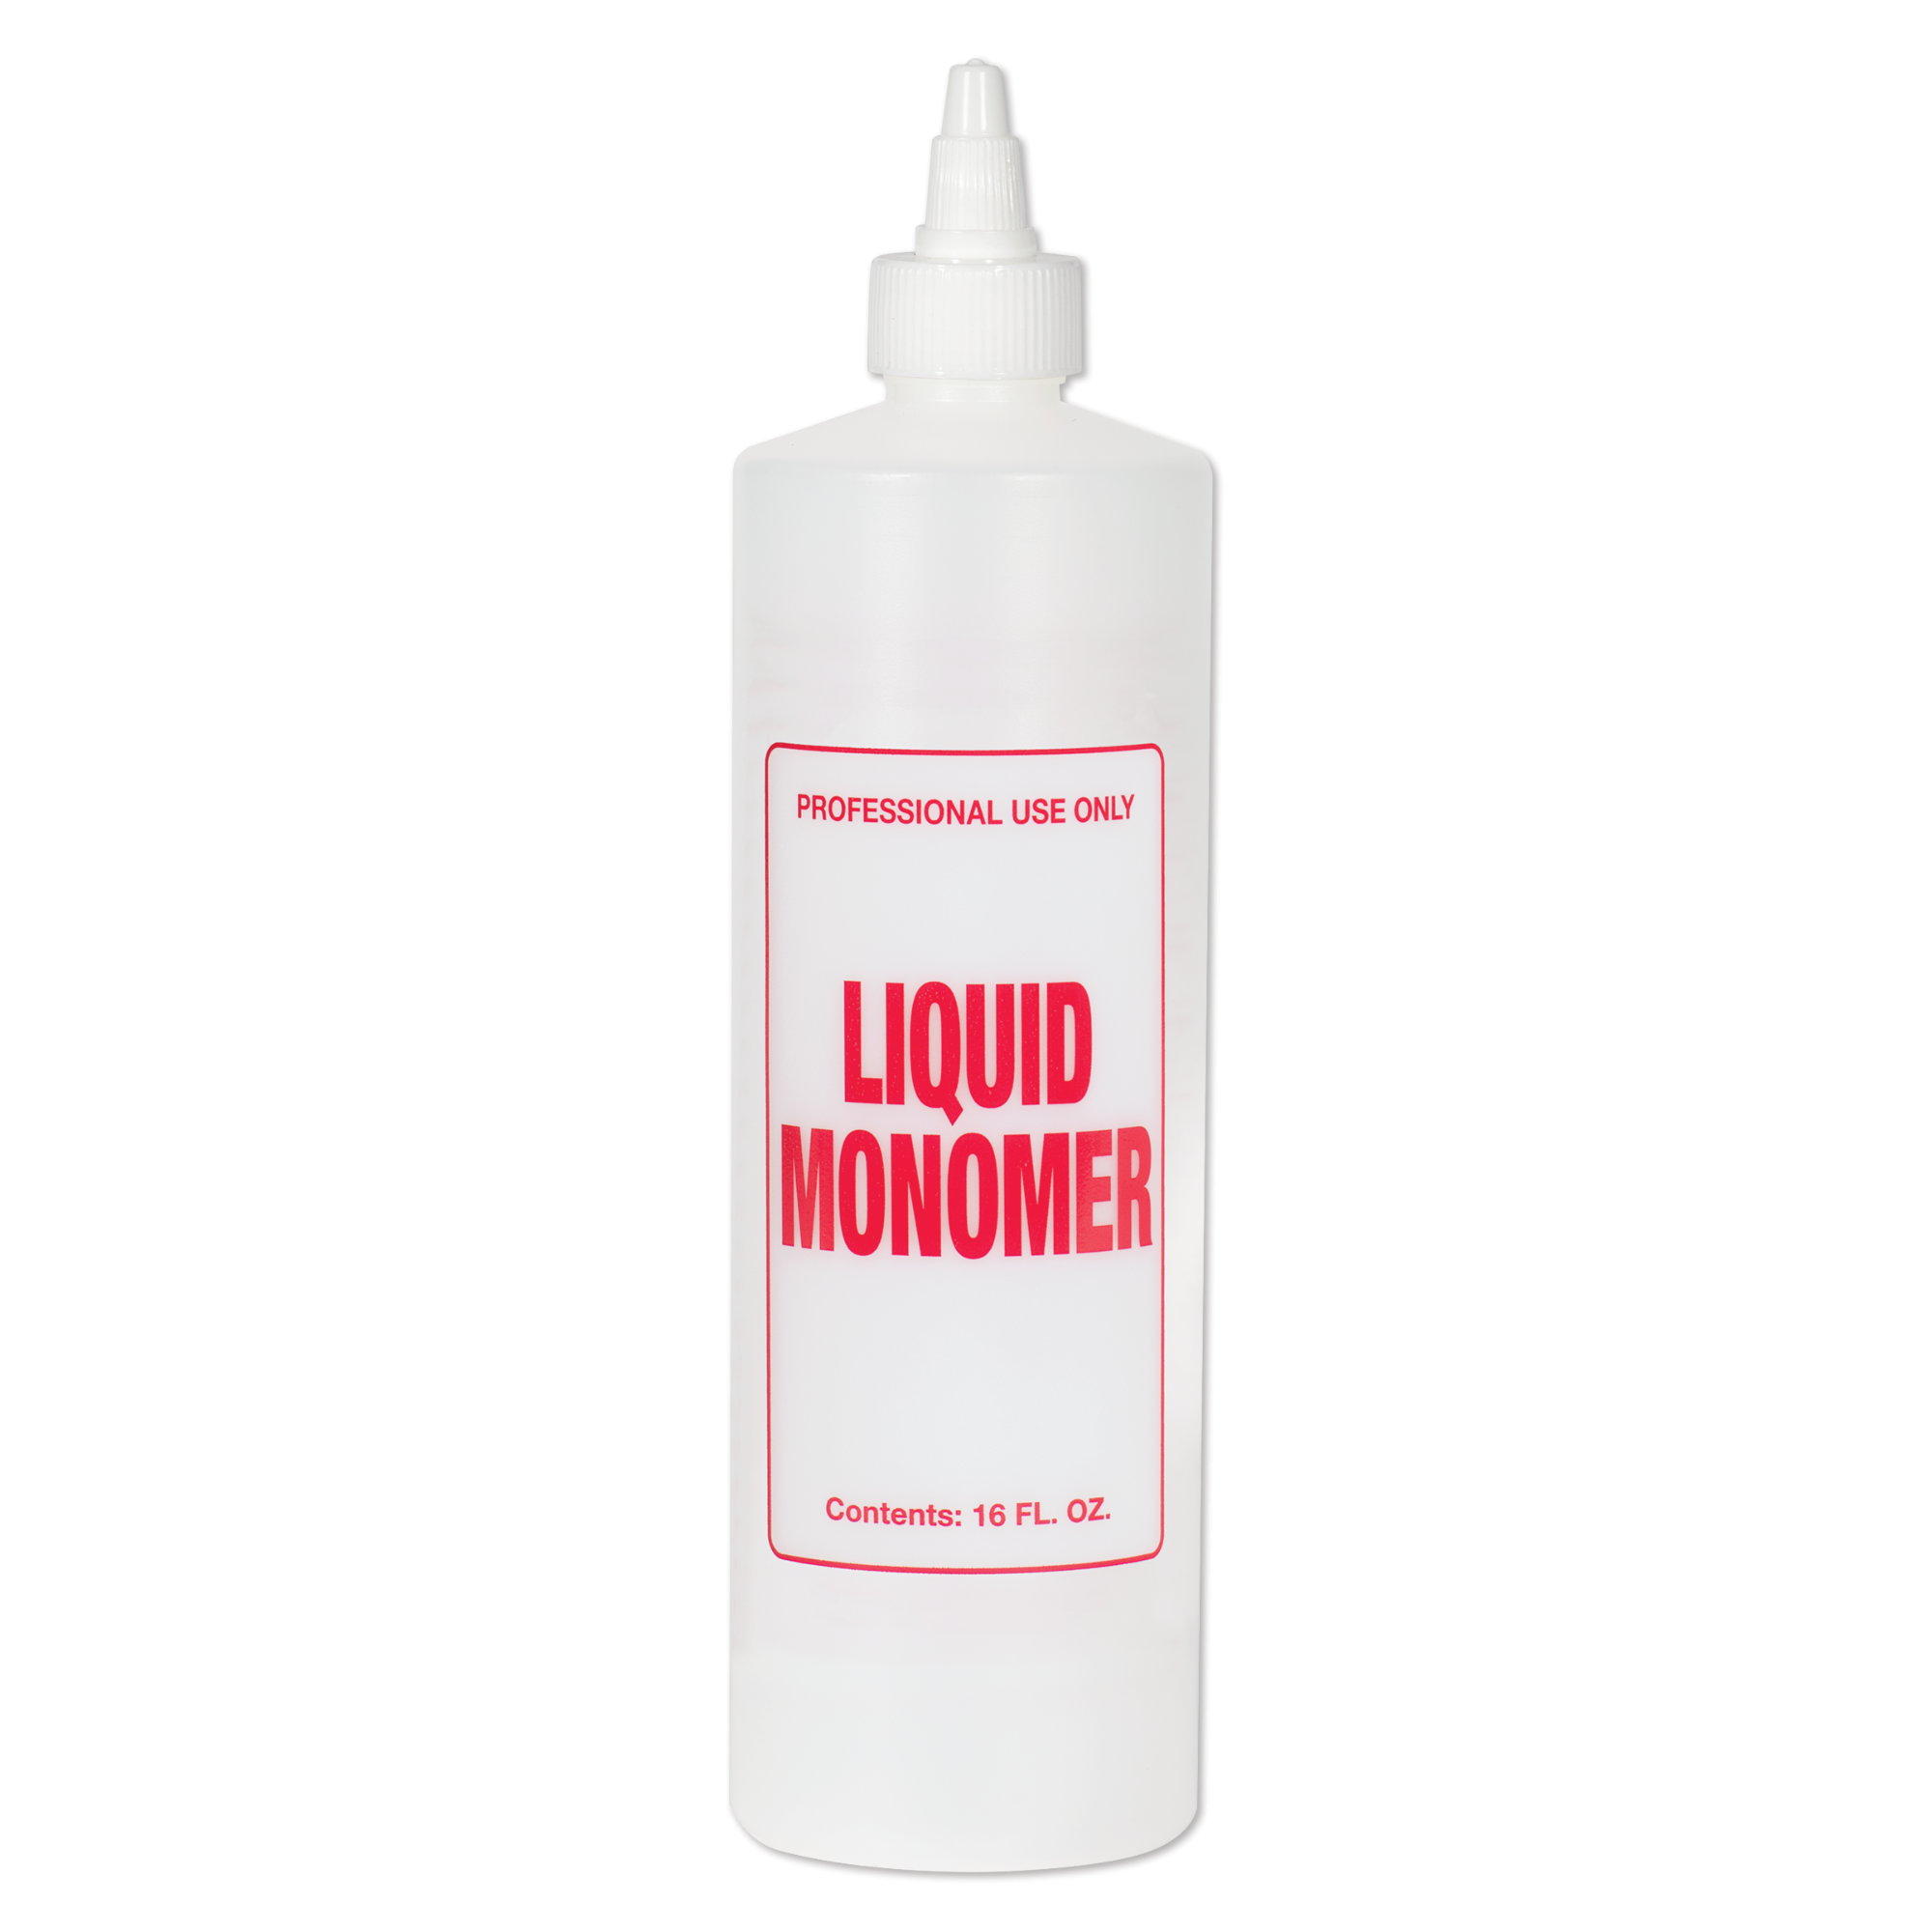 Imprinted Twist Top Bottle, Liquid Monomer, 16 oz.